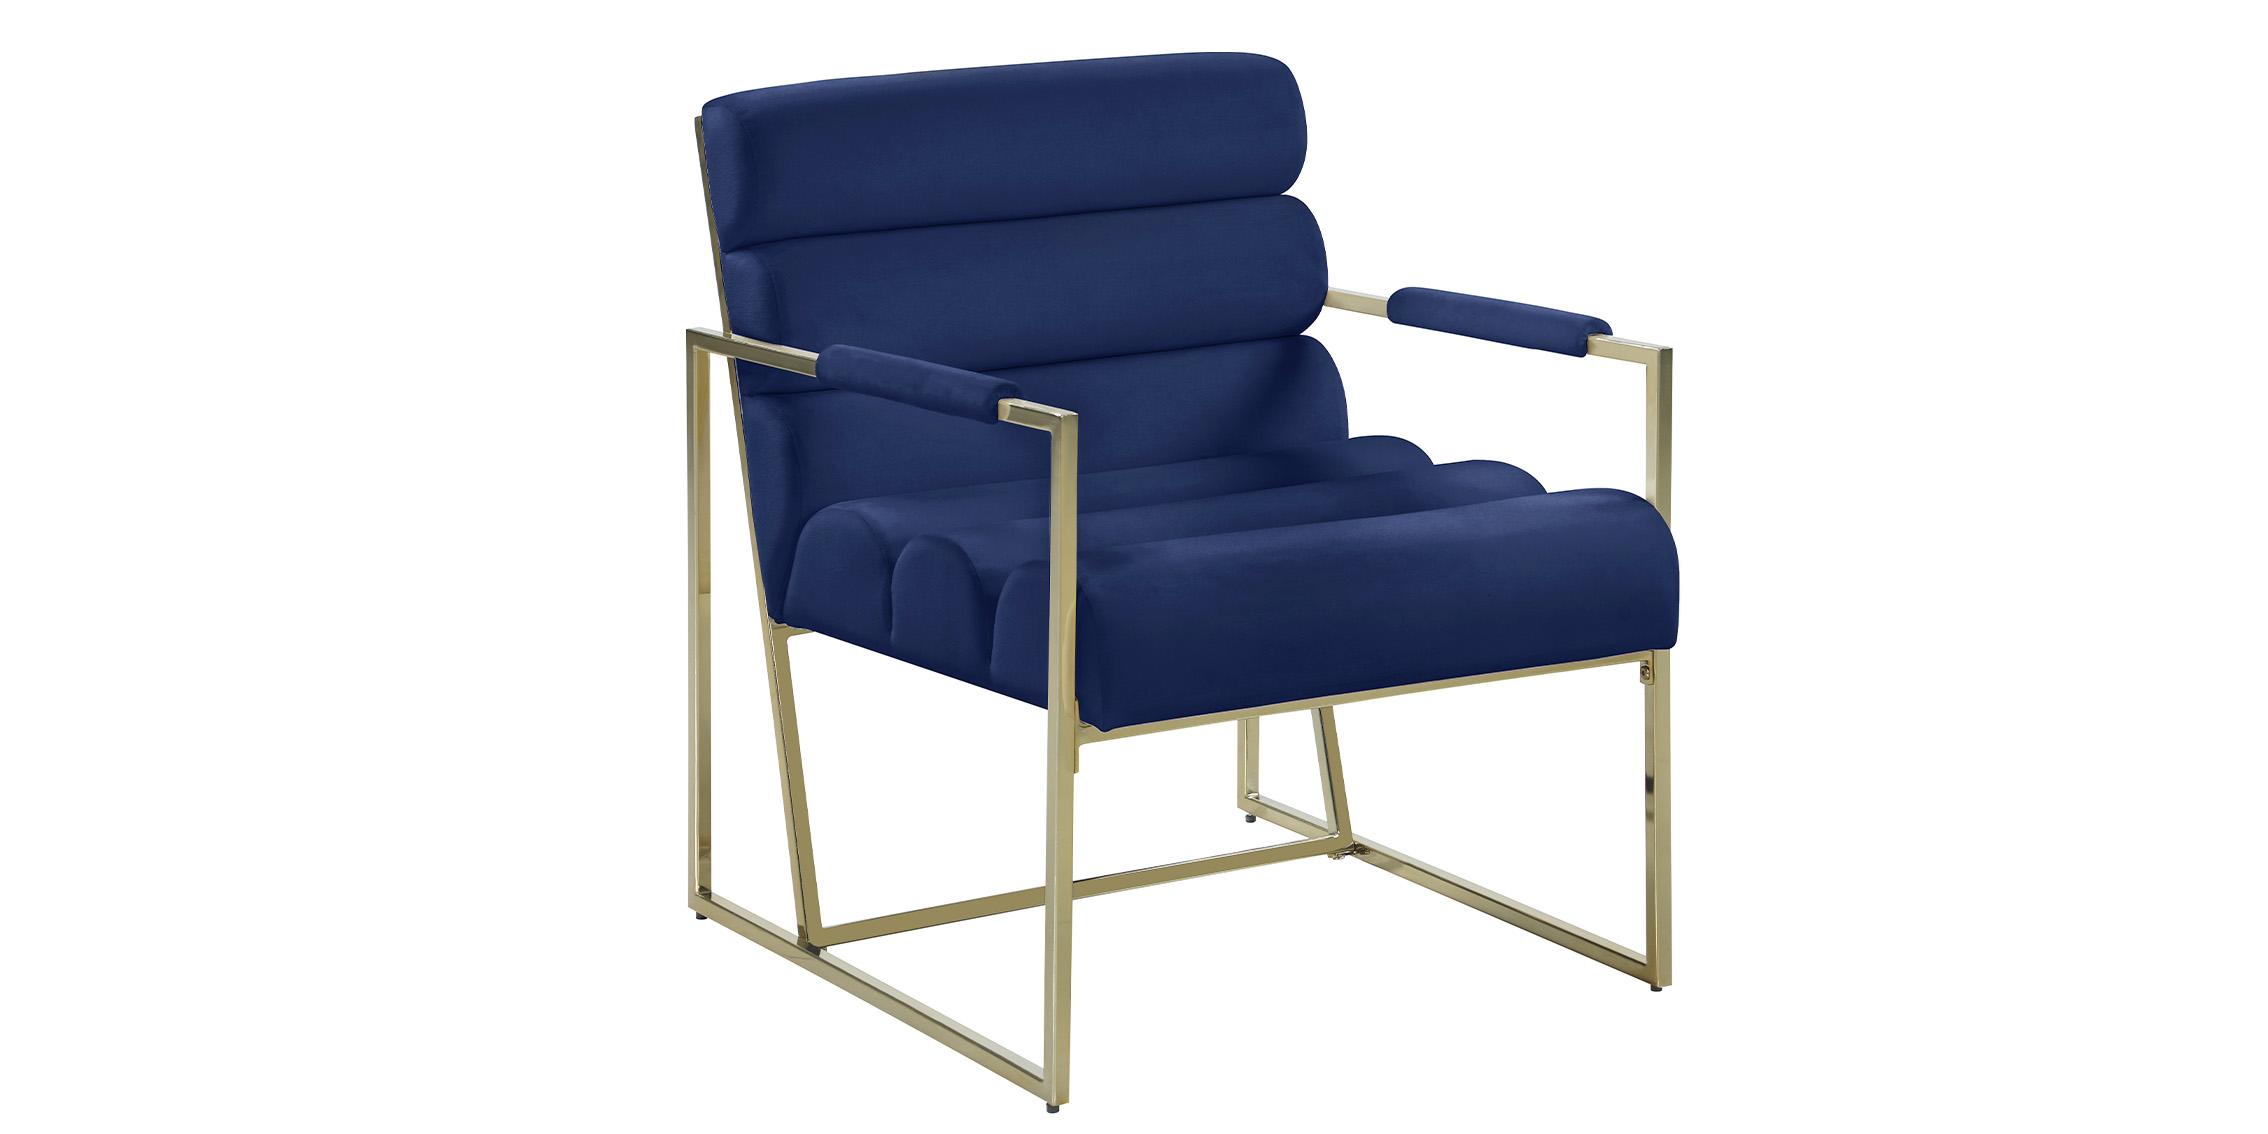 Contemporary, Modern Accent Chair WAYNE 526Navy 526Navy in Navy, Gold Velvet